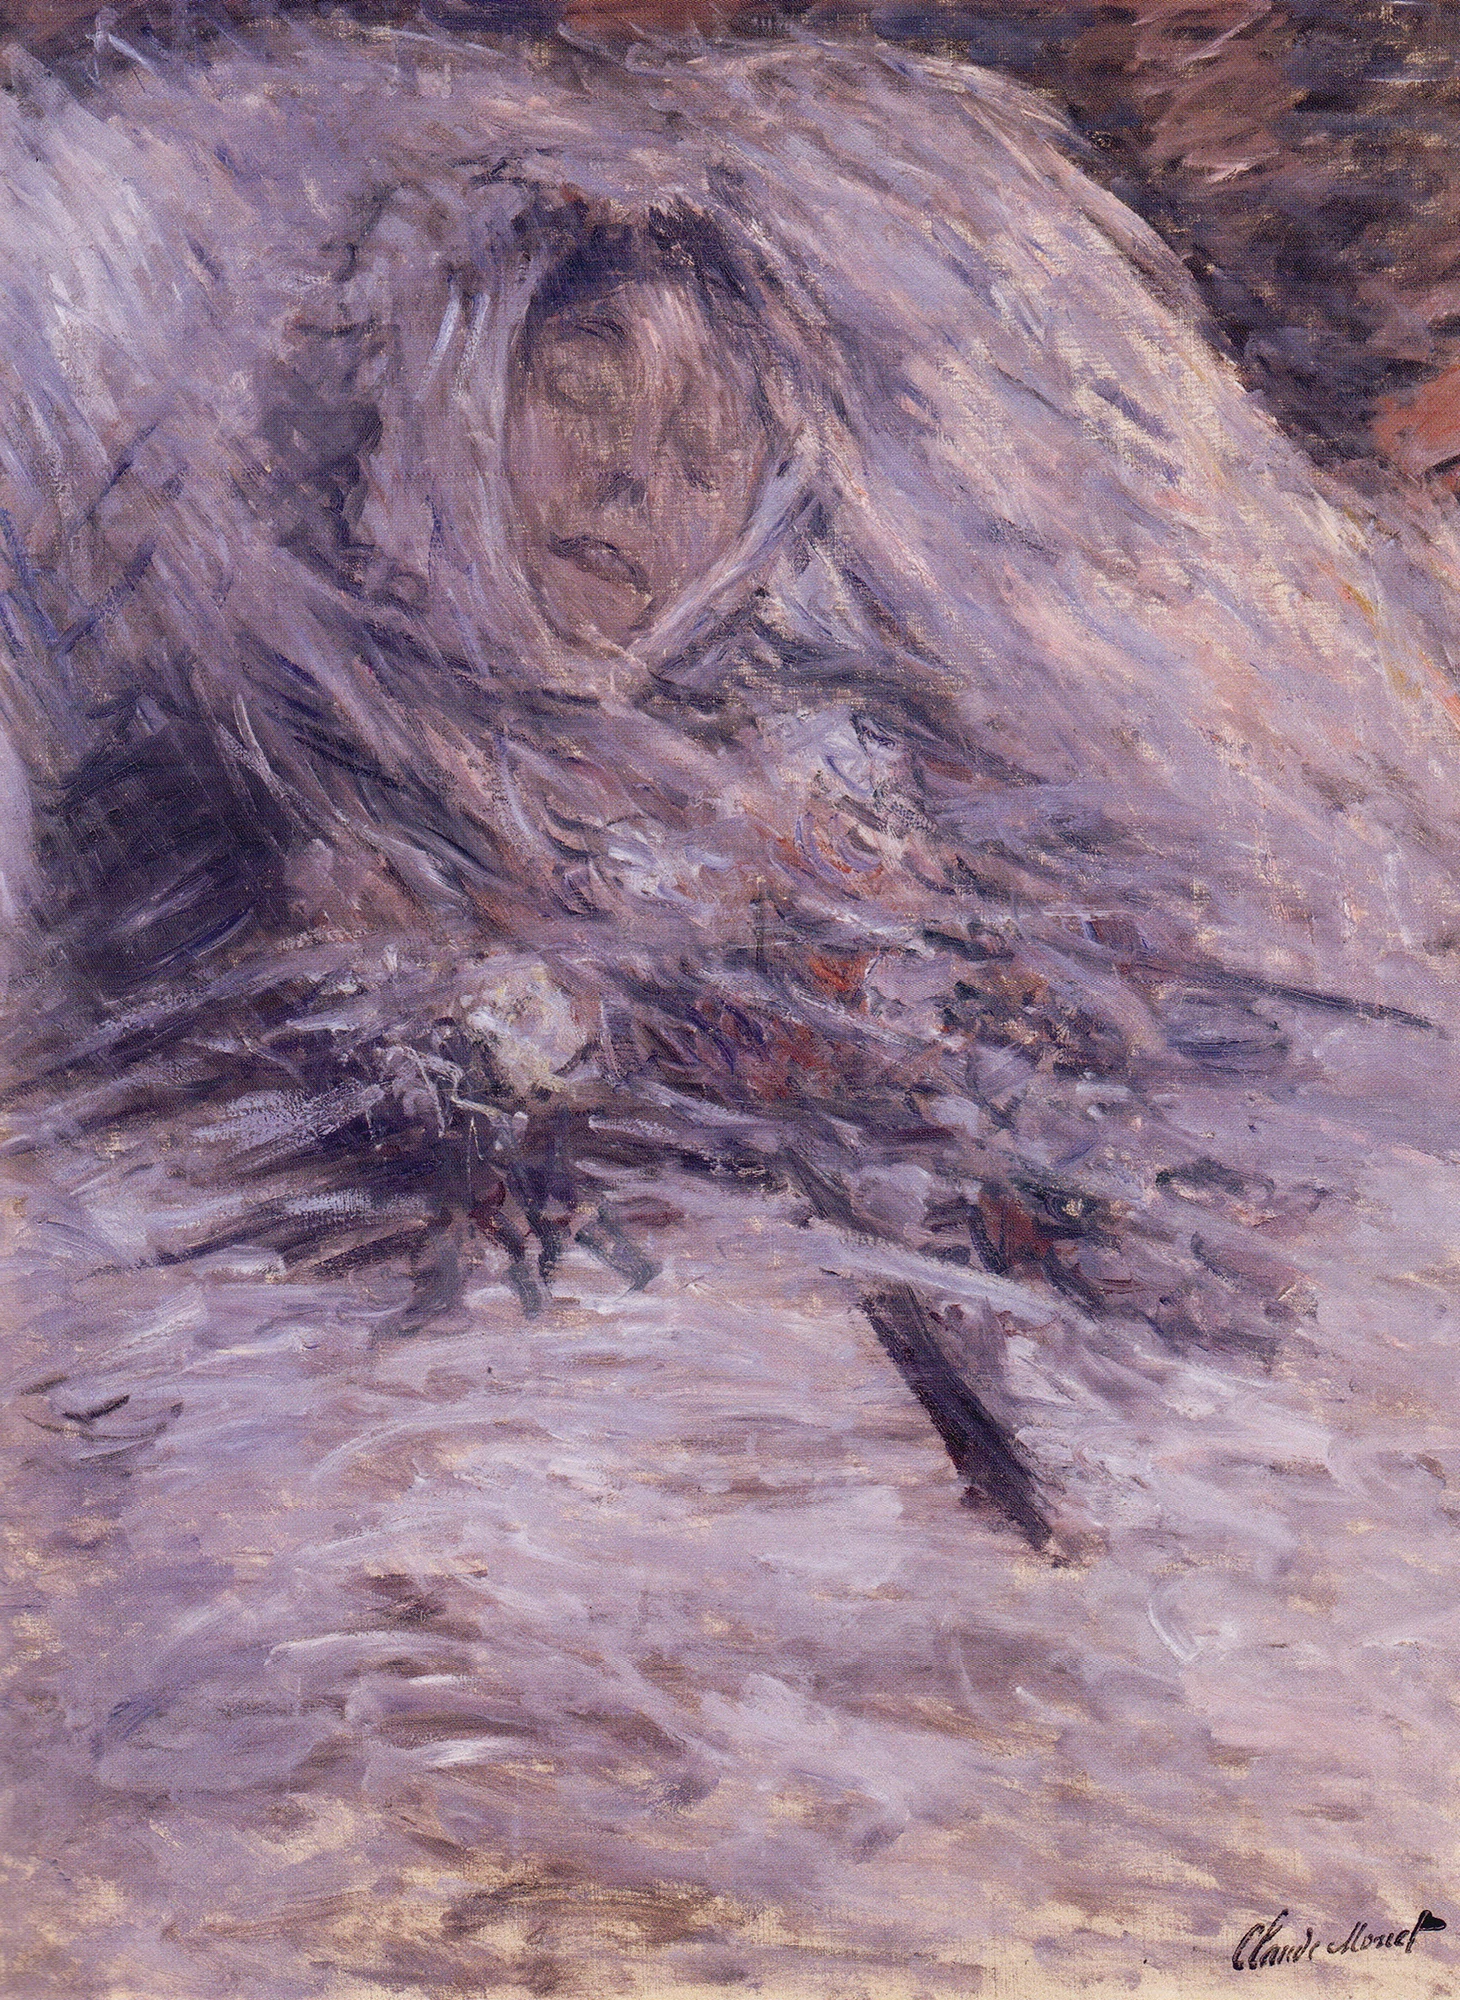 Camille Monet on her Deathbed, Claude Monet